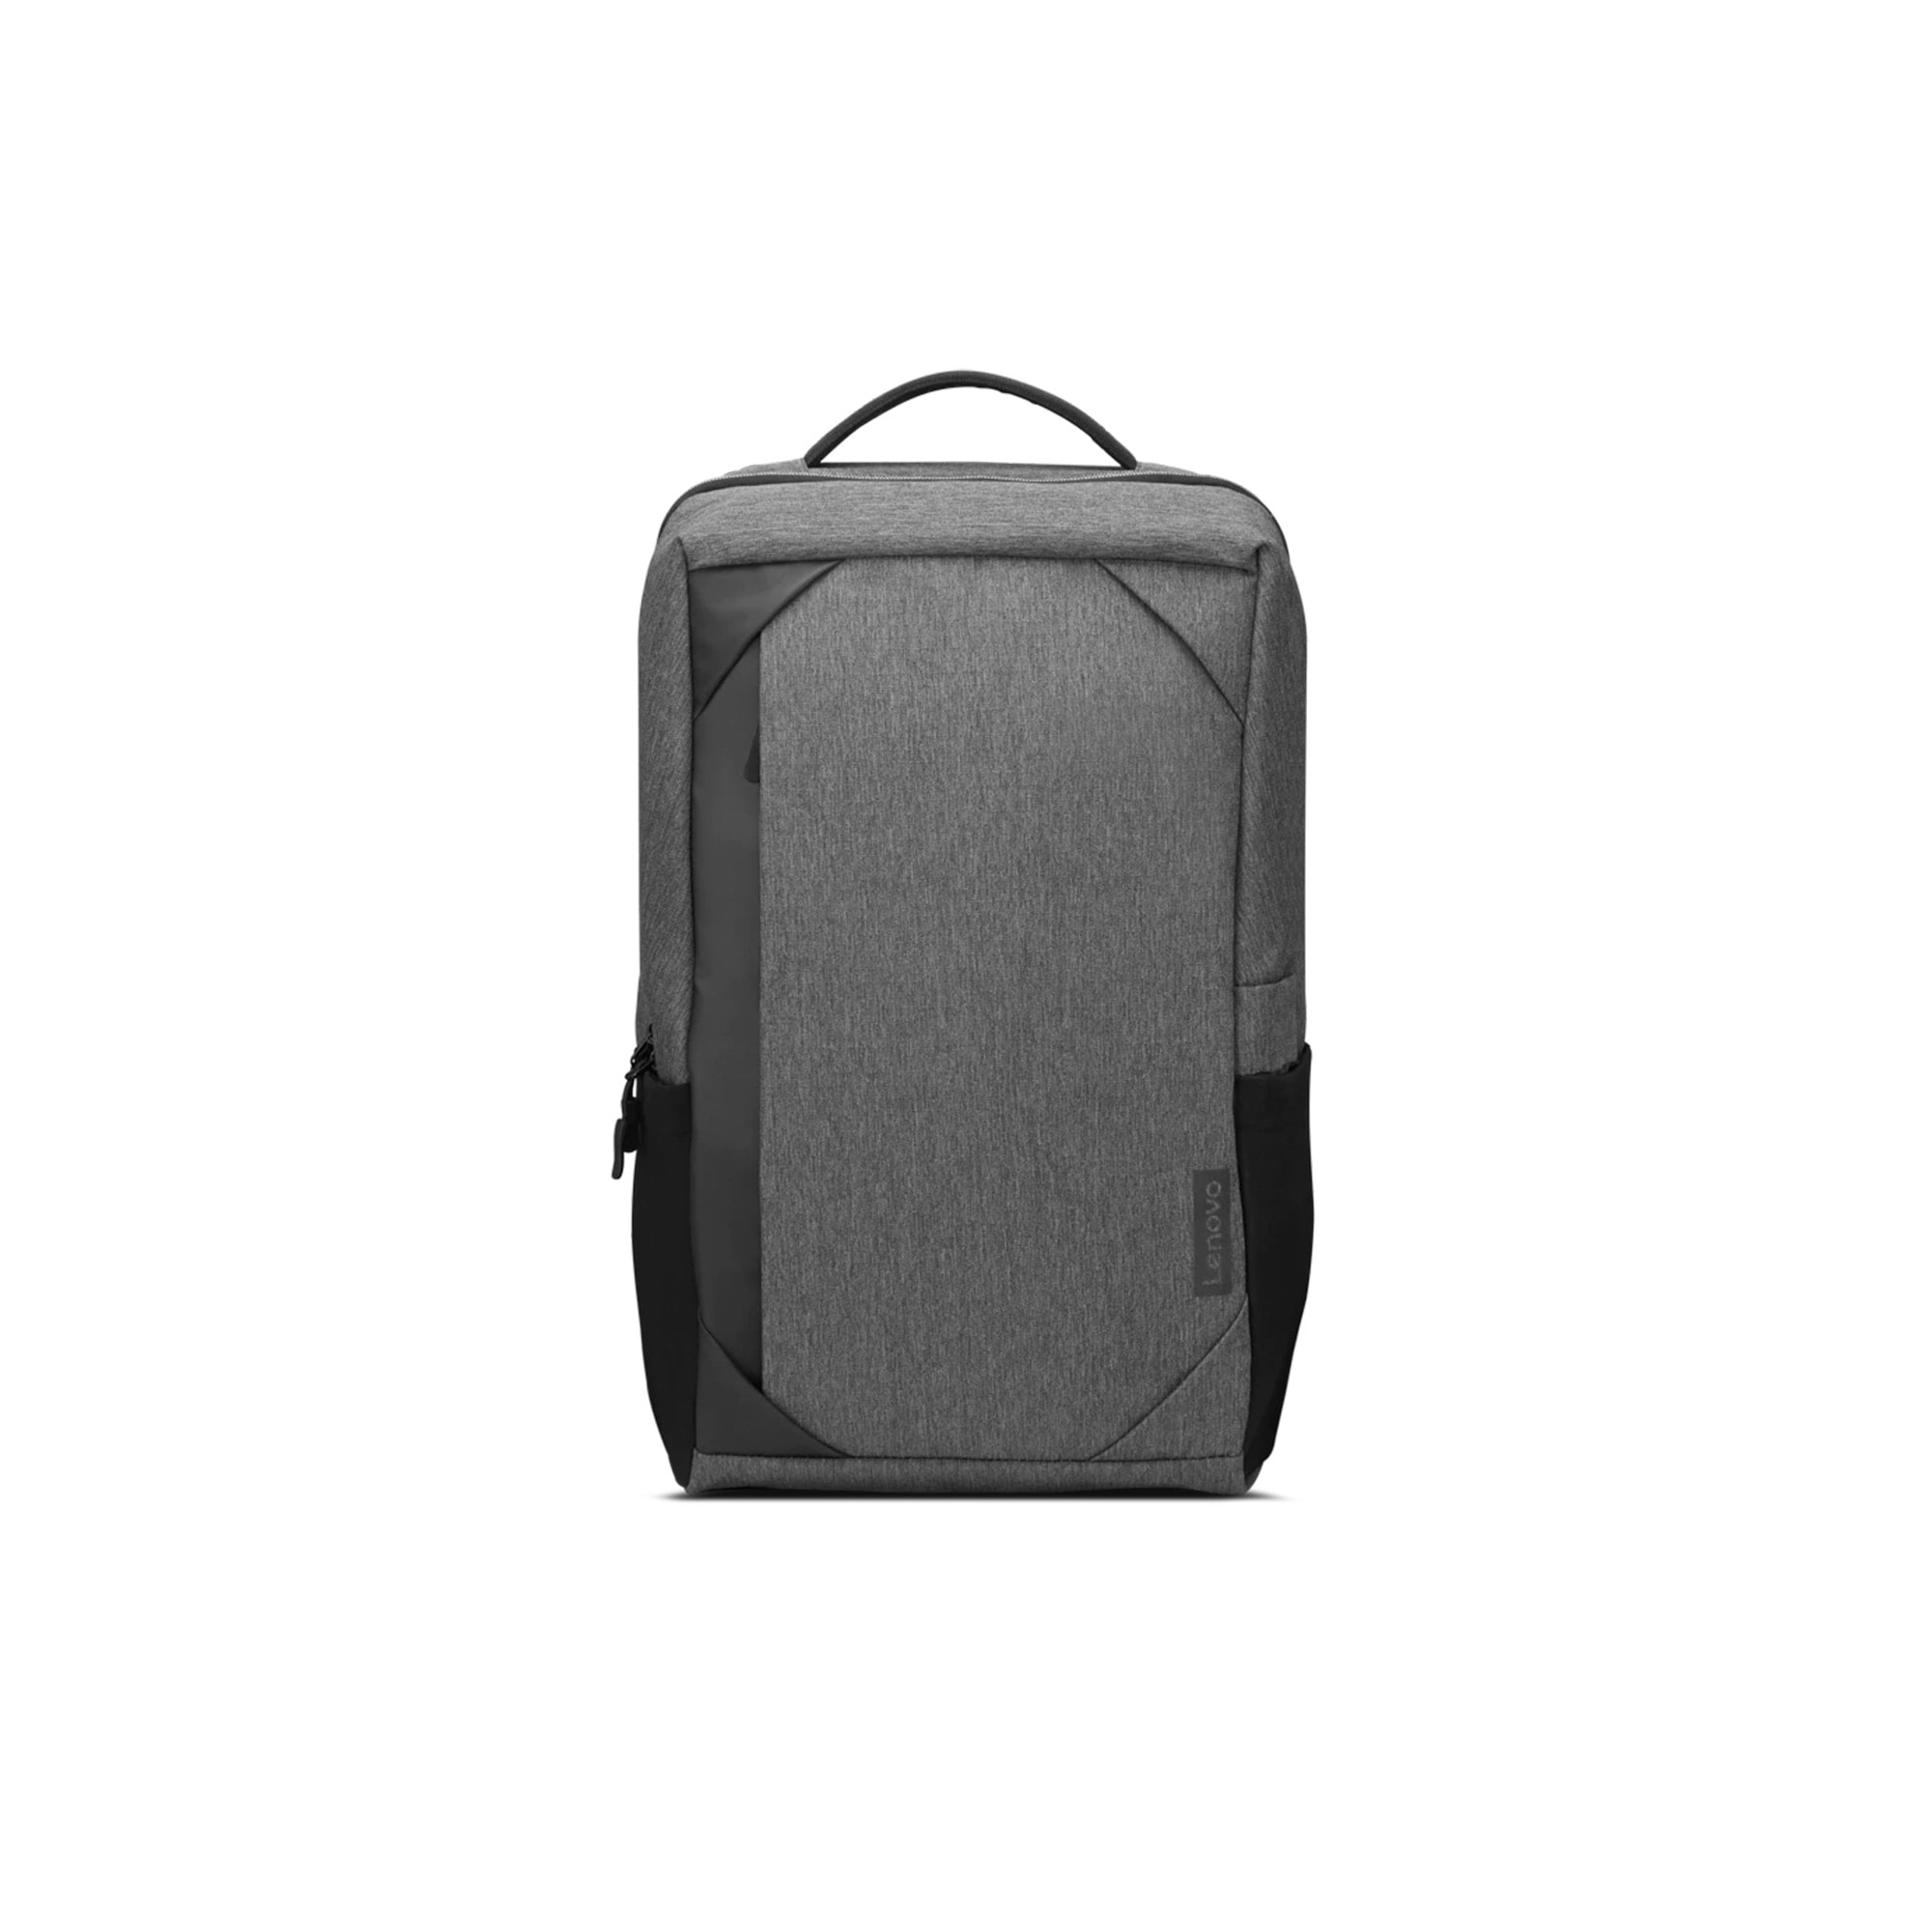 Lenovo 15.6-inch Laptop Urban Backpack B530 | eBay